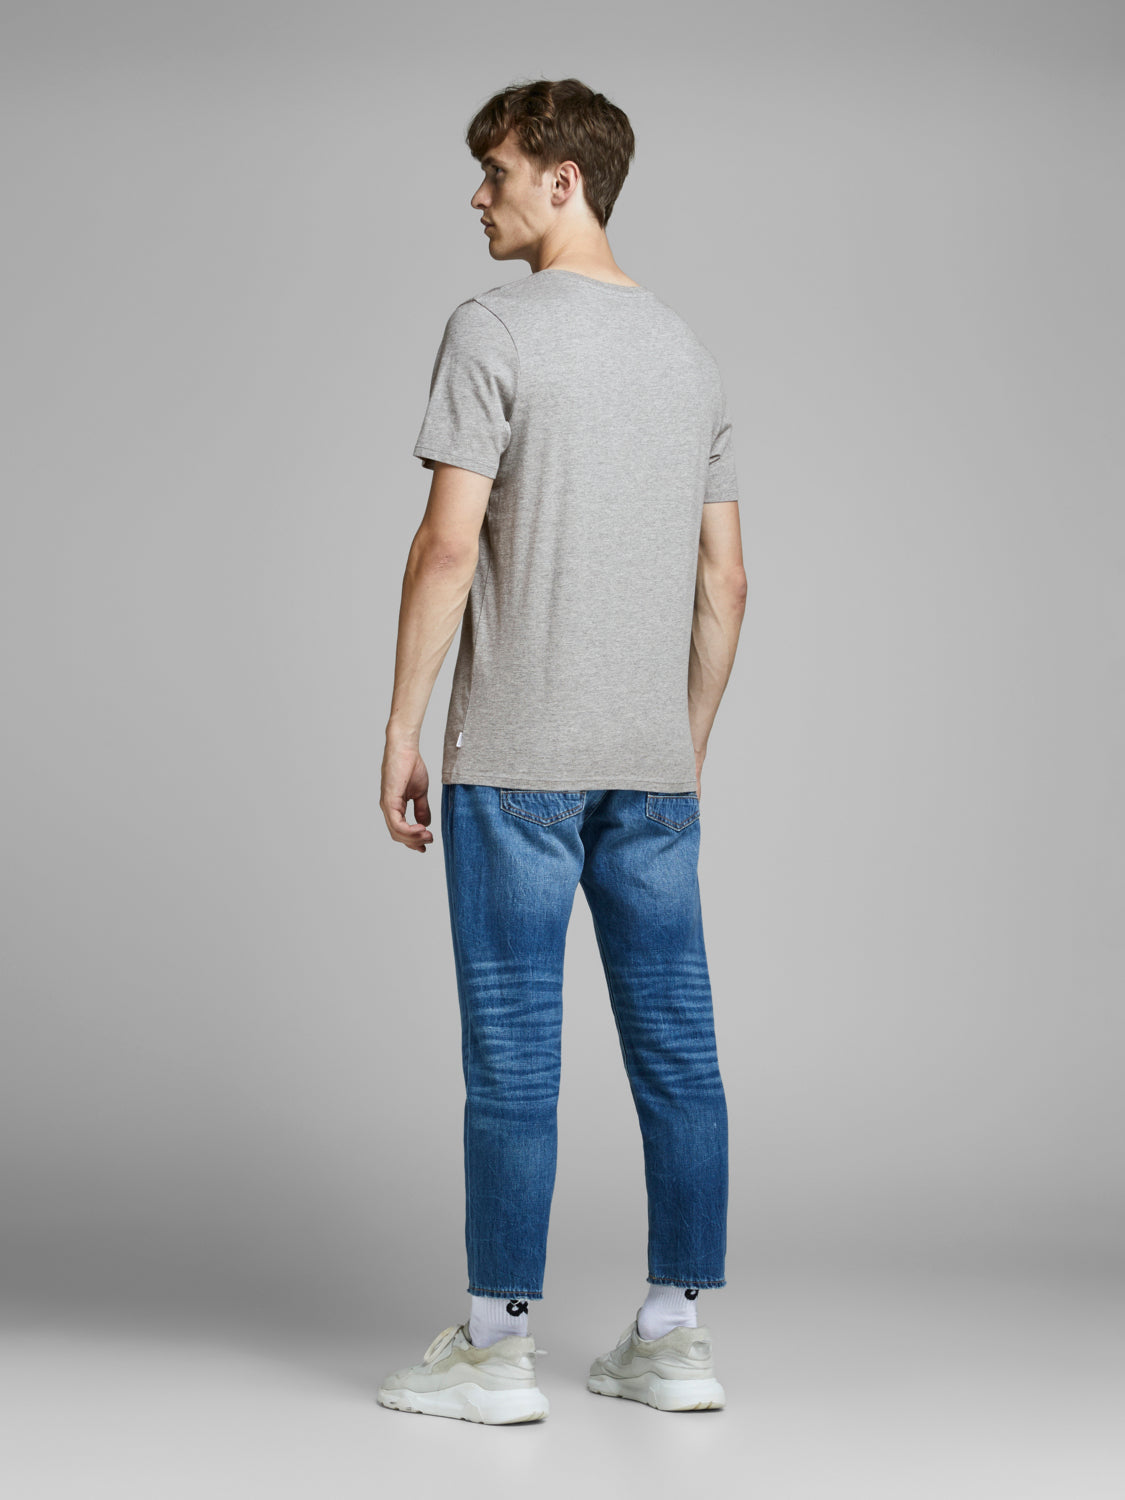 JJEORGANIC T-Shirt - Light Grey Melange